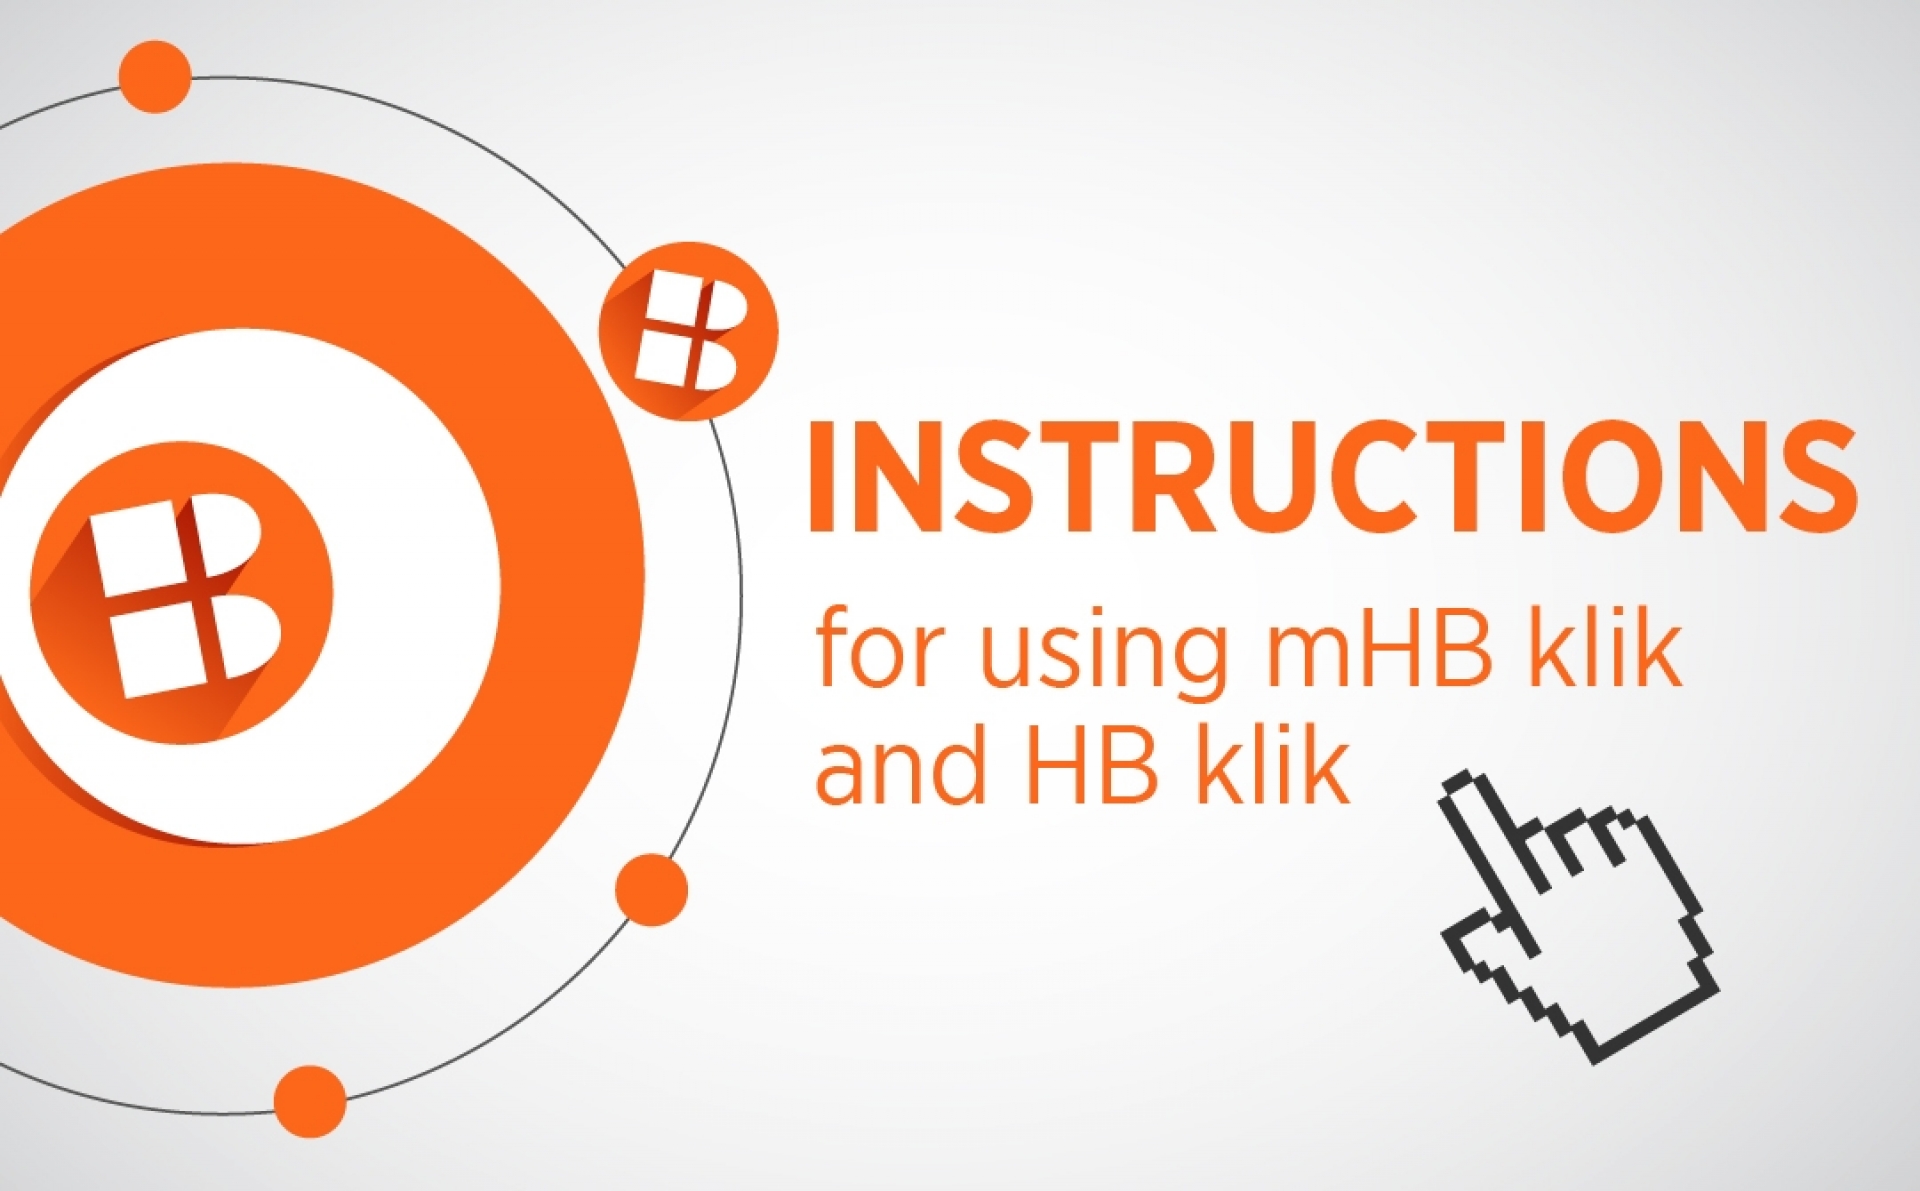 Instructions for using mHB klik and HB klik